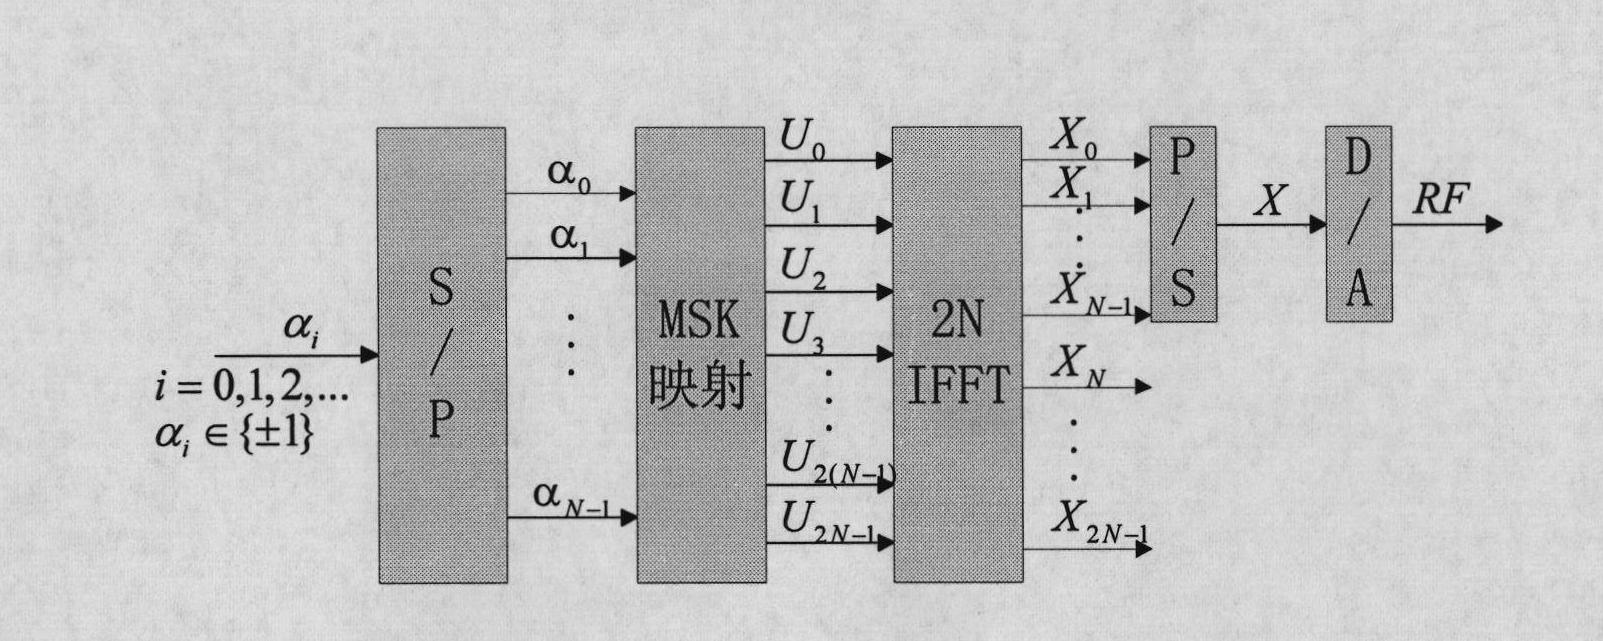 Constant-envelop light OFDM-MSK (orthogonal frequency division multiplexing-minimum shift keying) modulation method